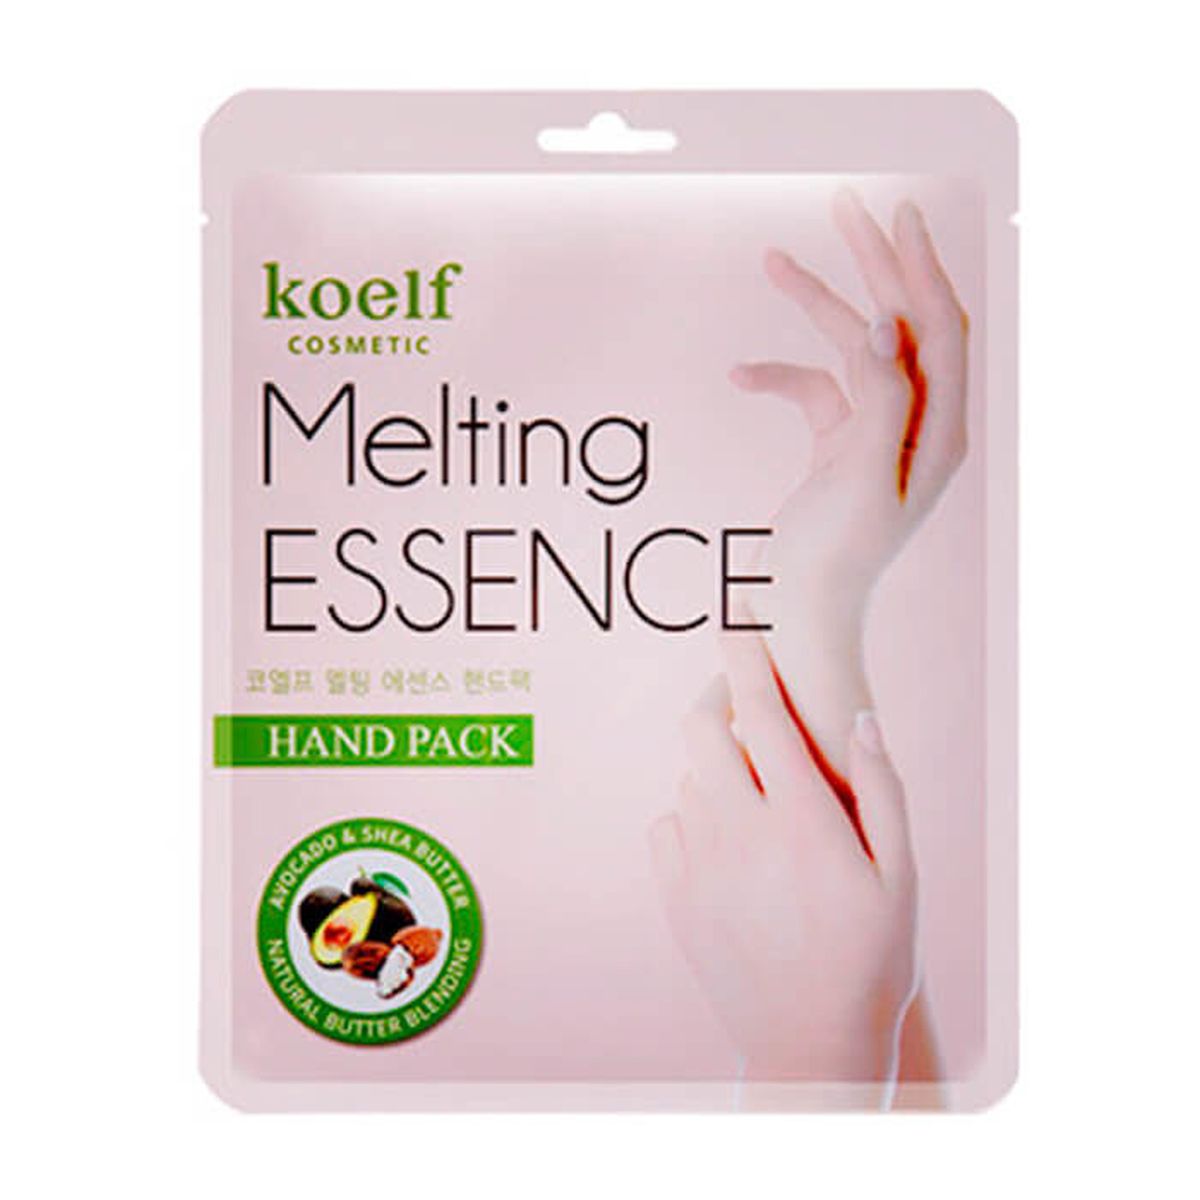 Смягчающая маска-перчатки для рук KOELF Melting Essence Hand Pack - 14 гр